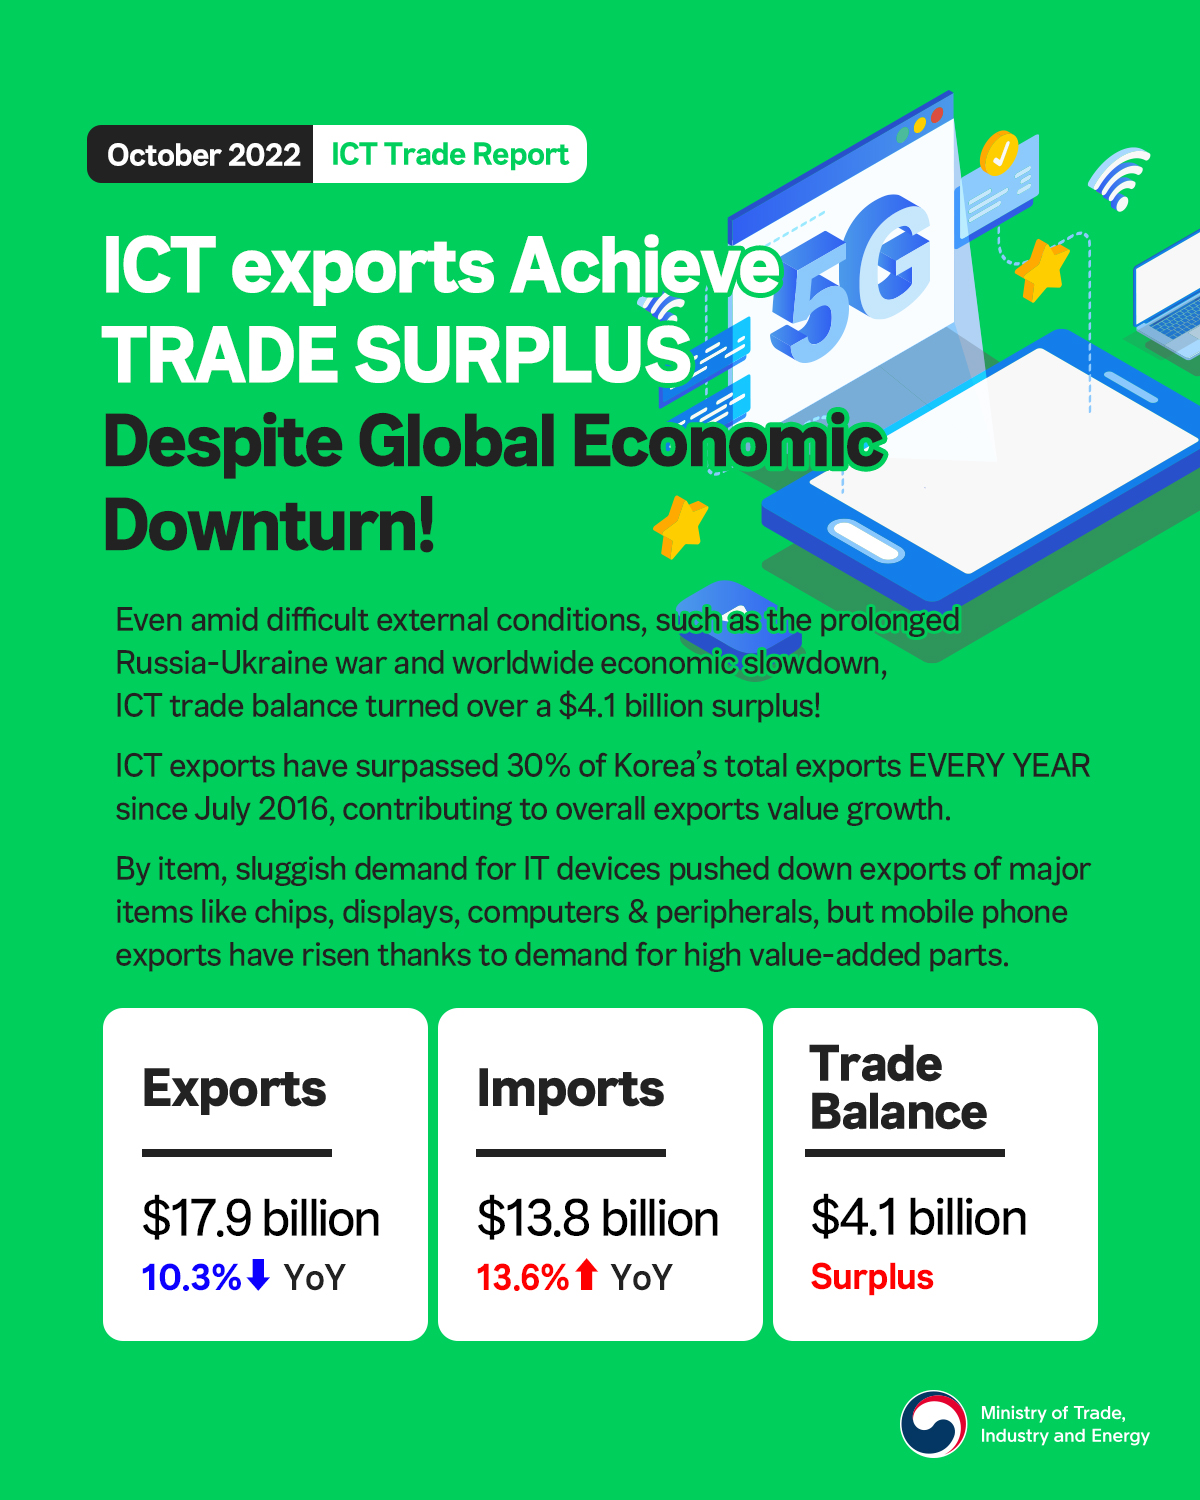 Korea's ICT exports achieve trade surplus amid global economic difficulties!